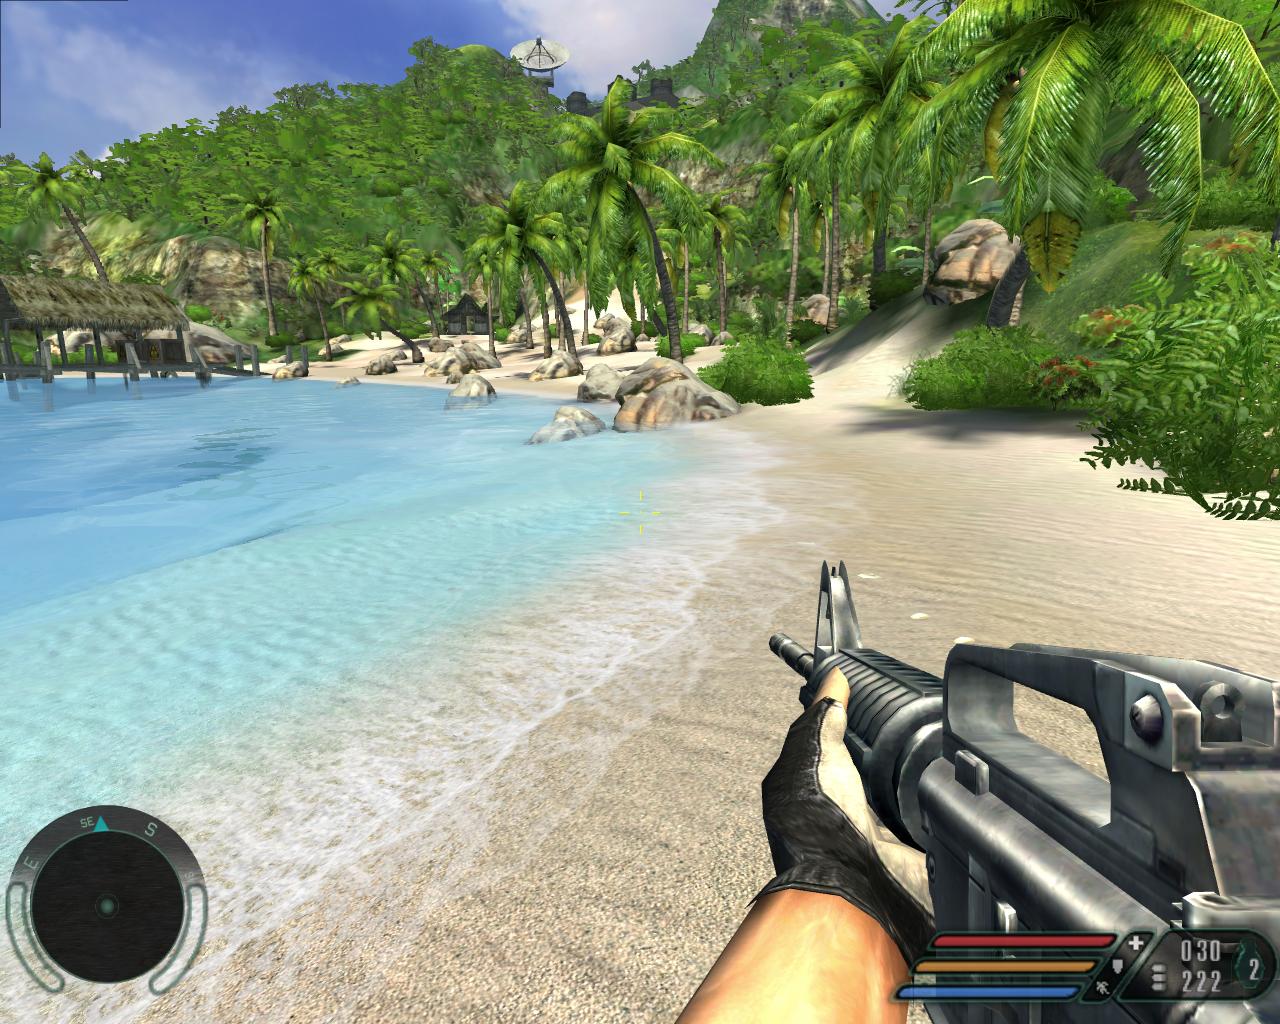 Far Cry 2 Rewards Mod 1.01 Direct Download version file - Mod DB